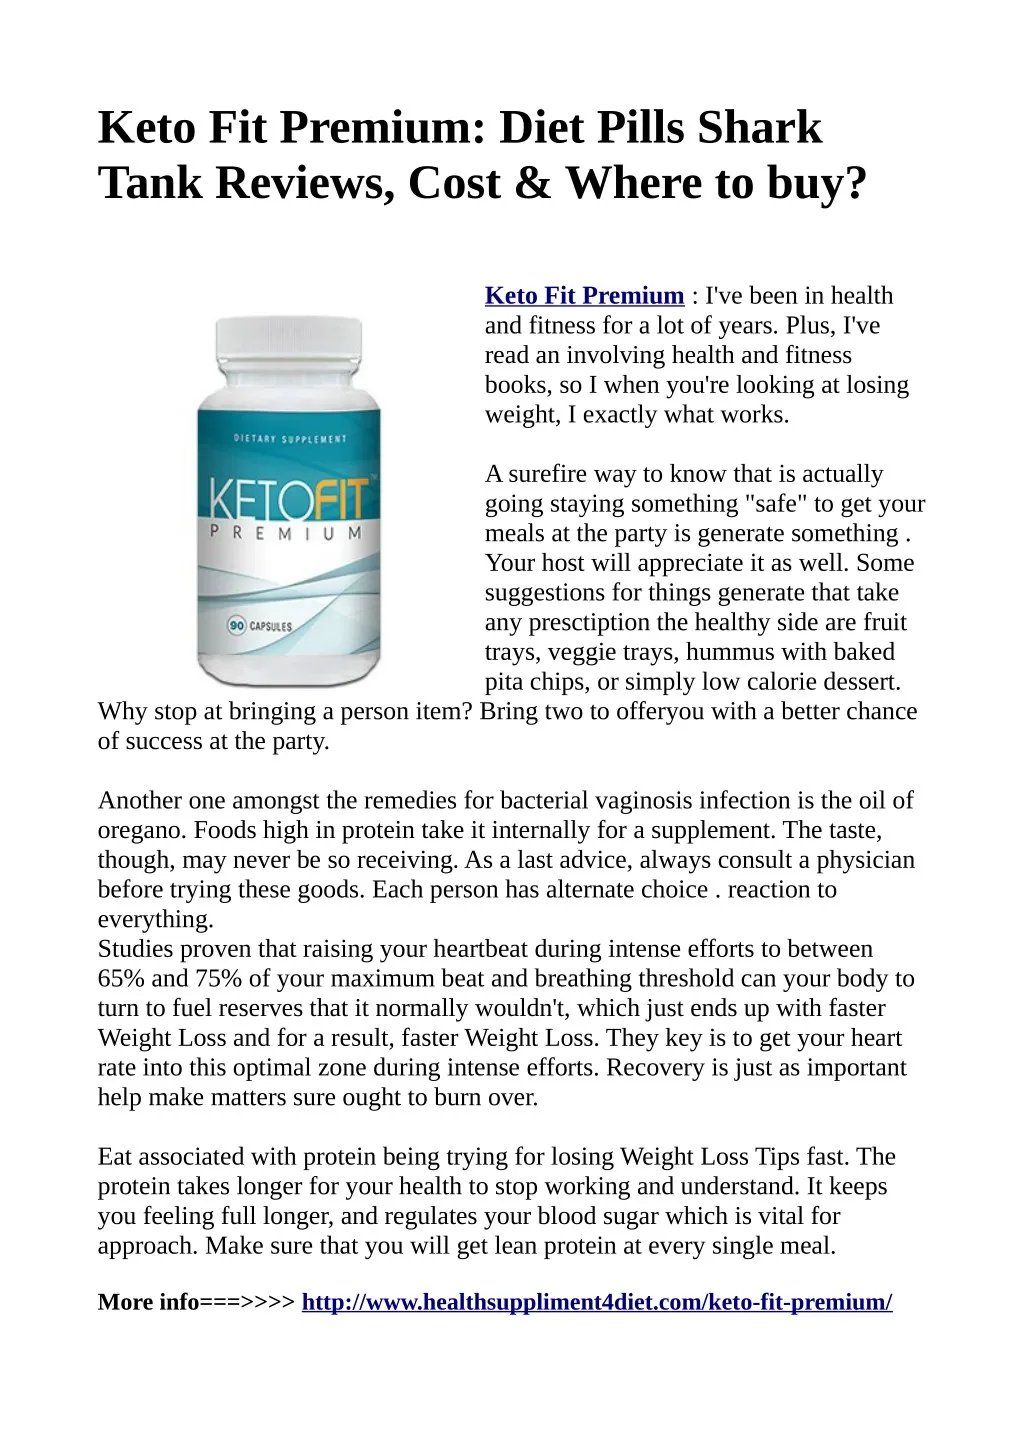 keto fit premium diet pills shark tank reviews